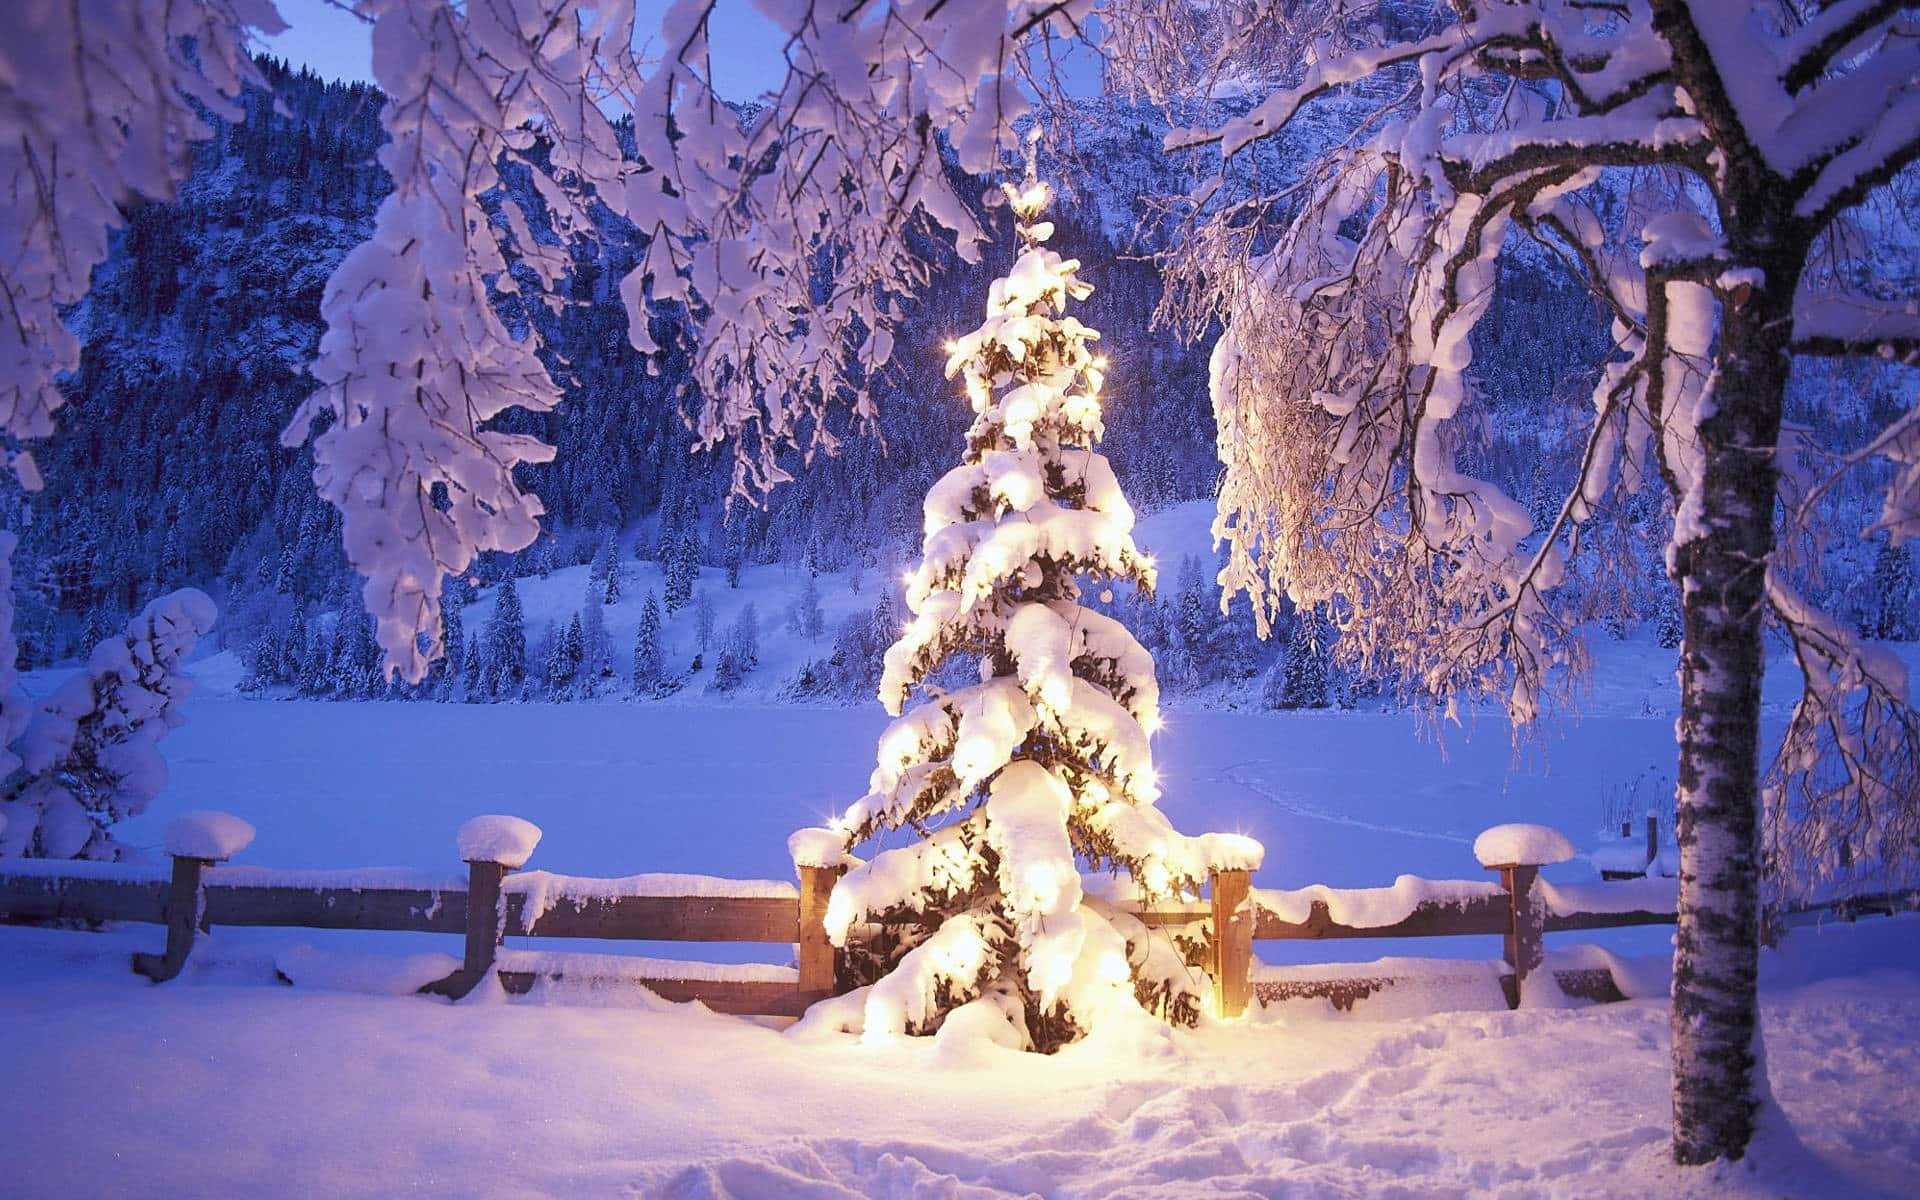 Fondode Pantalla De Navidad Con Árbol Nevado Iluminado.